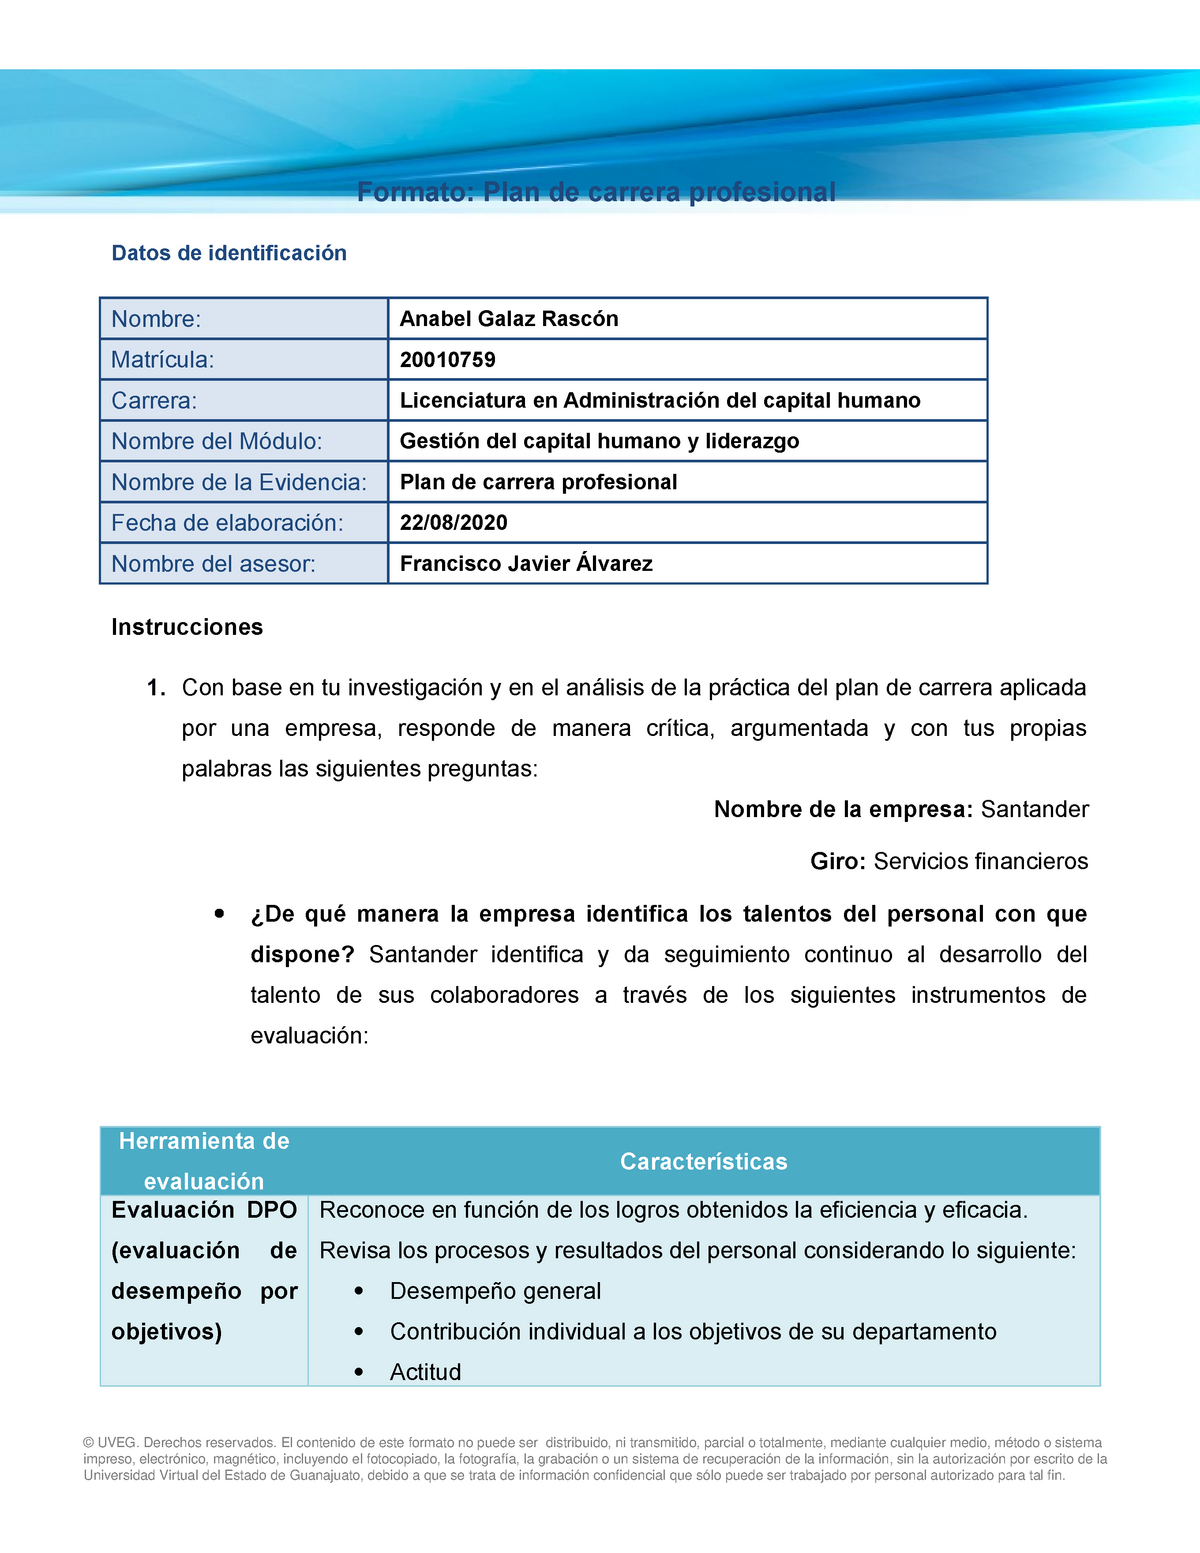 Plan de carrera profesional - Formato: Plan de carrera profesional Datos de  identificación Nombre: - Studocu